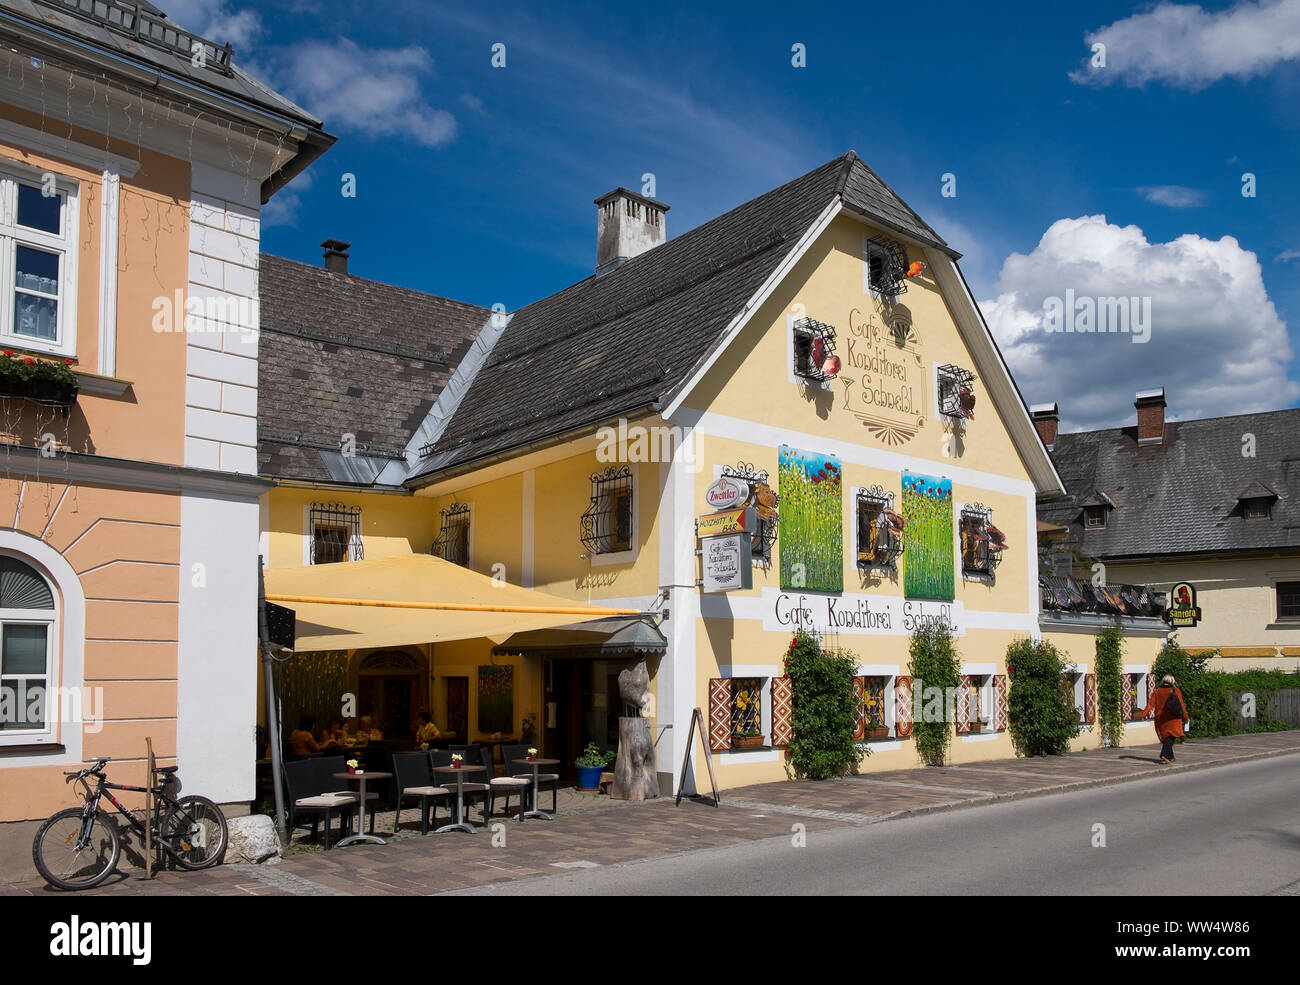 CafÃ© in GÃ¶stling at the Ybbs, Eisenwurzen, Mostviertel, Lower Austria, Austria Stock Photo